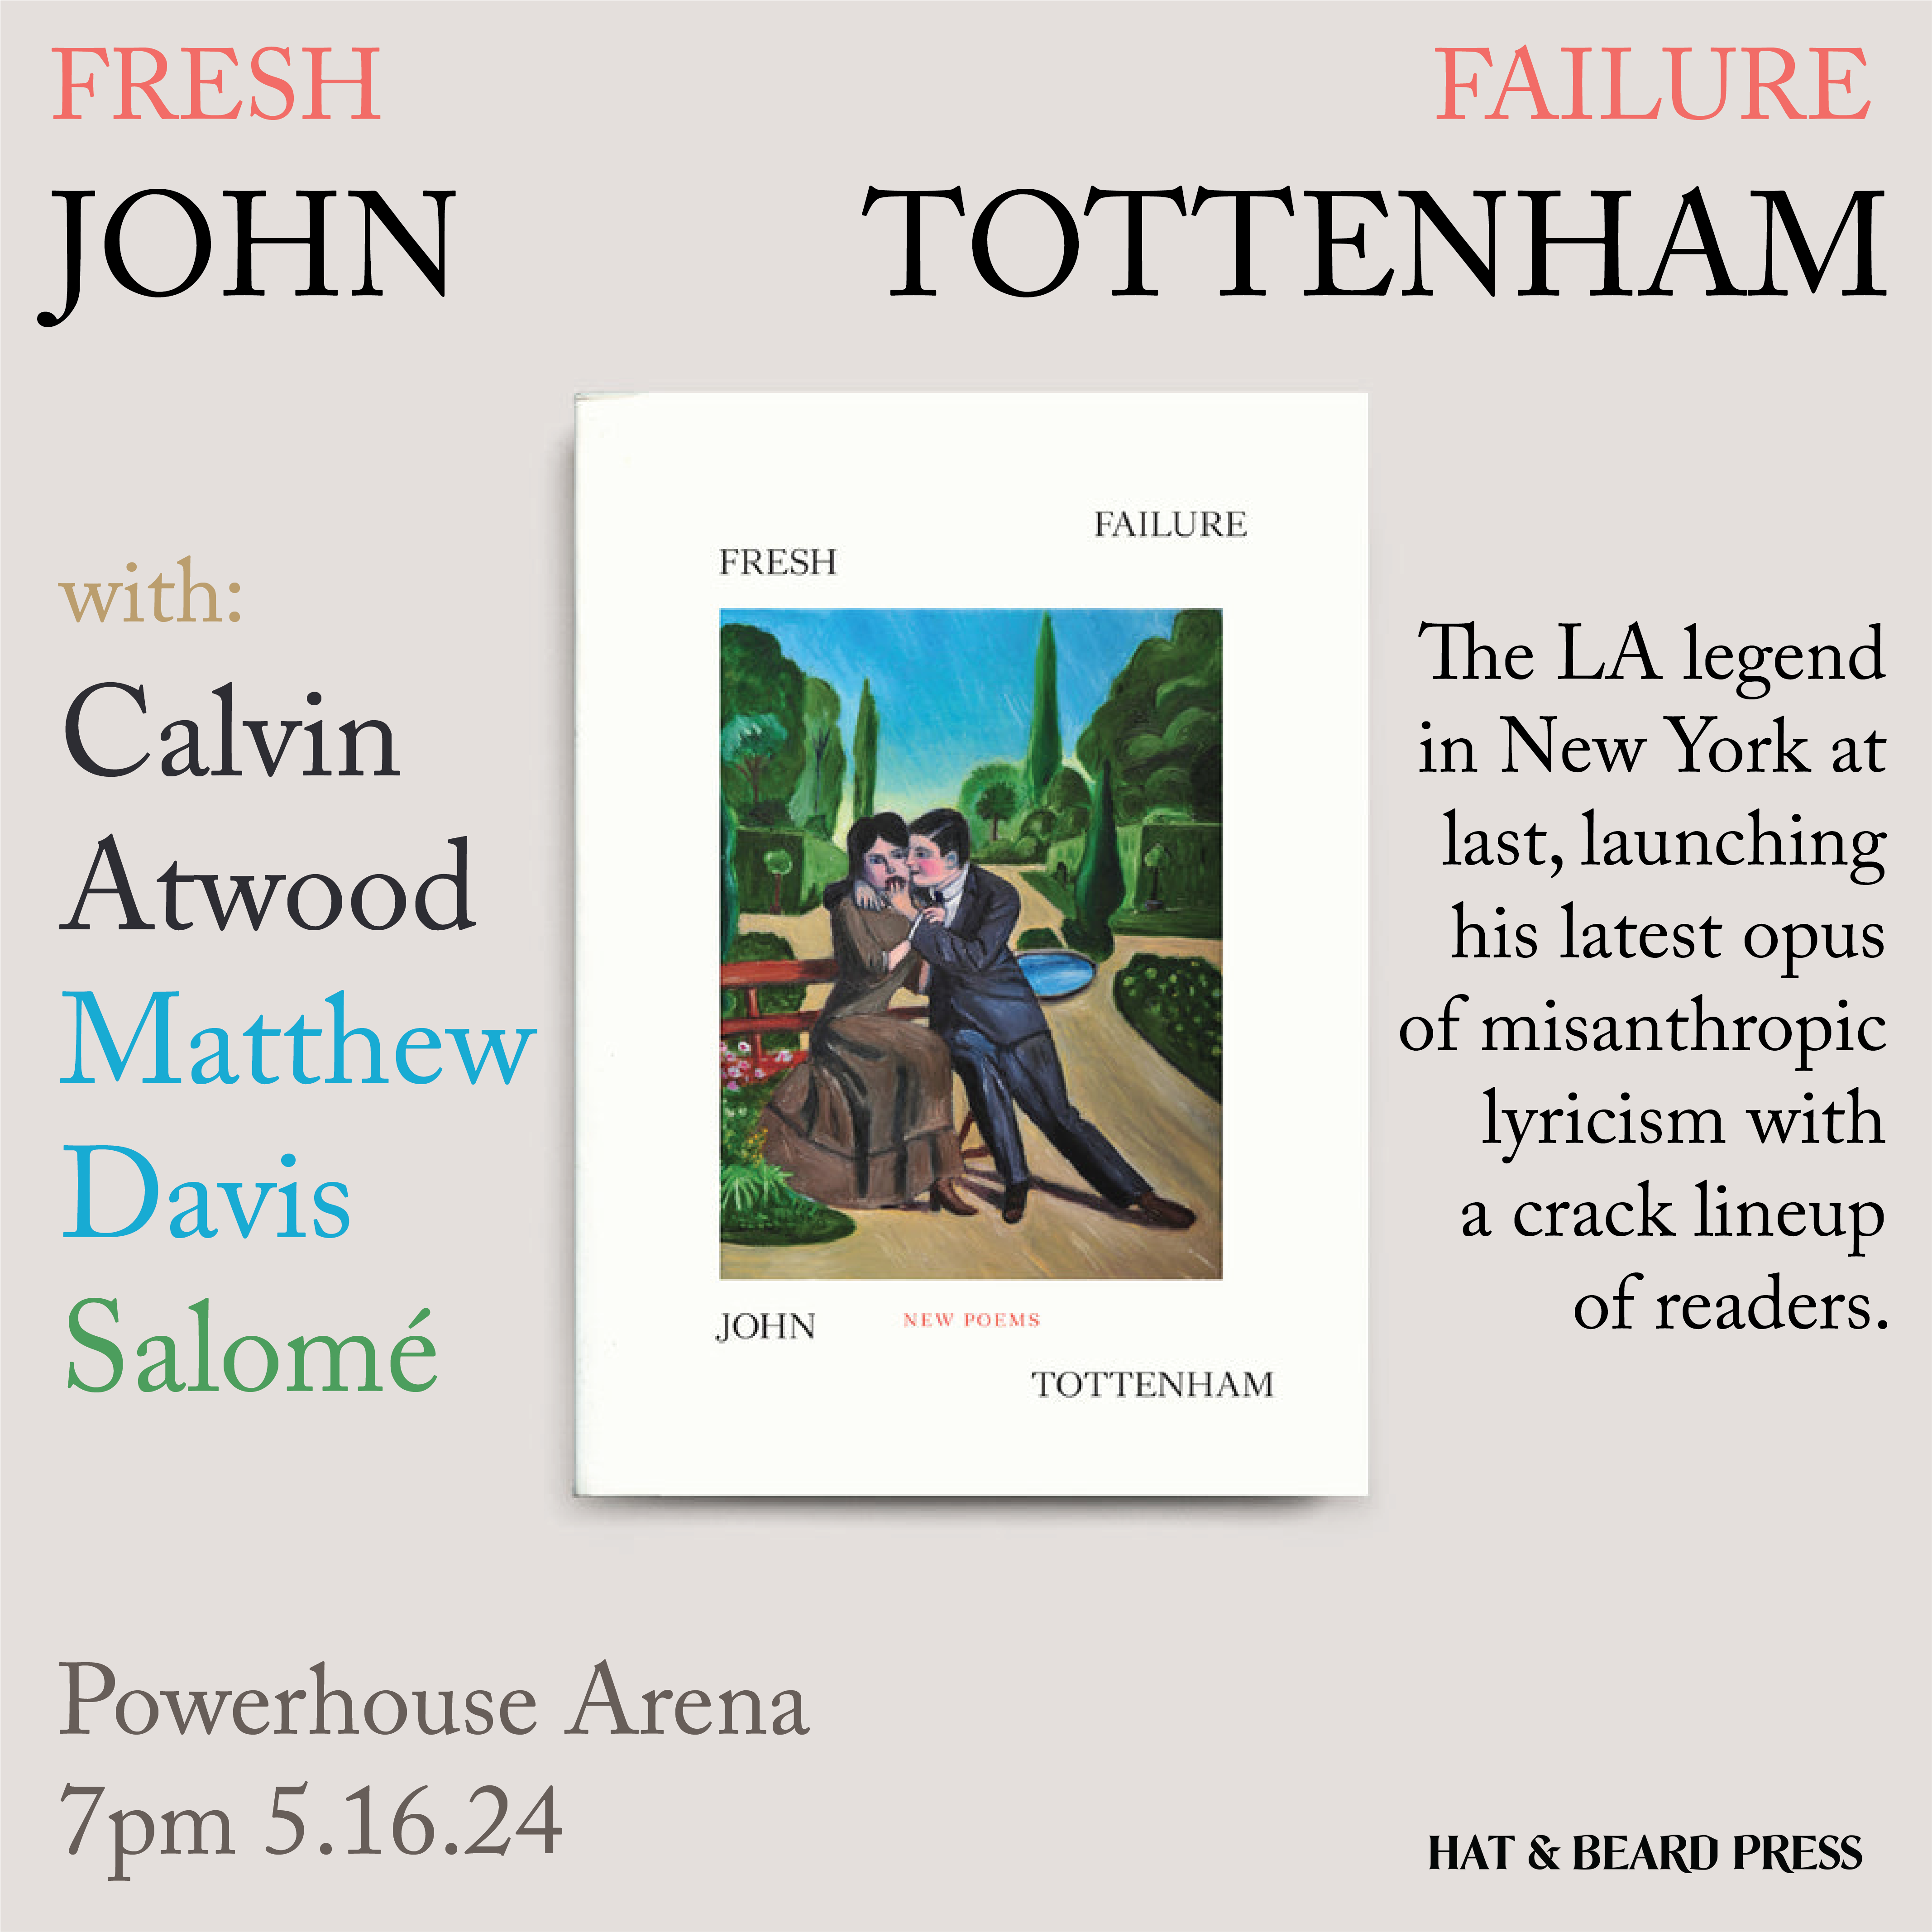 Book Launch: Fresh Failure by John Tottenham with Calvin Atwood, Matthew Davis and Salomé